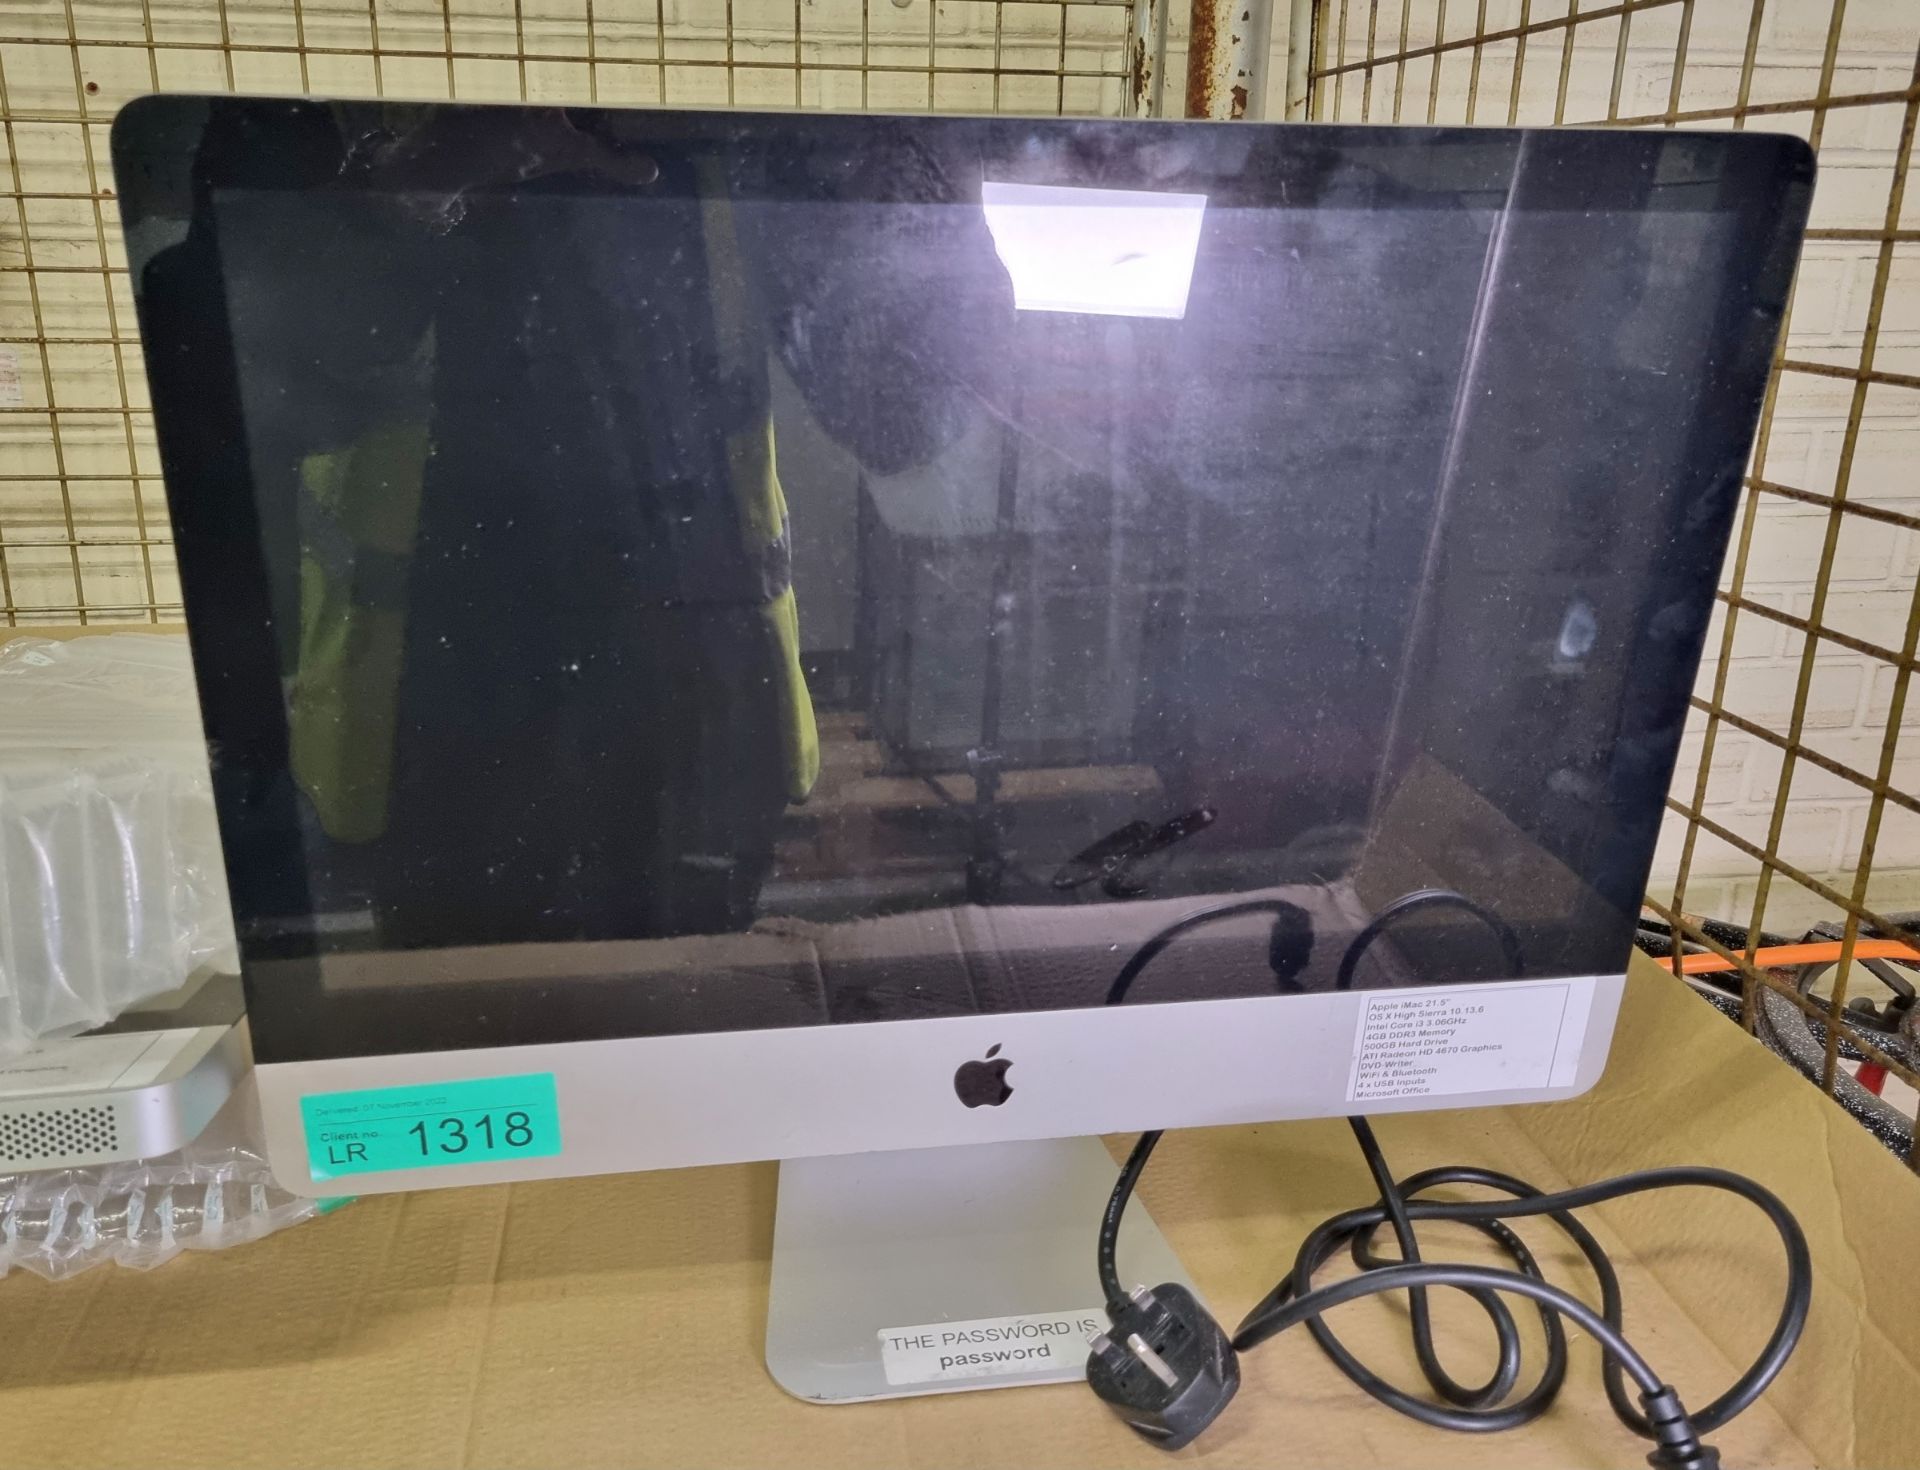 Apple iMac 21.5” OS X High Sierra Intel Core i3 4GB Memory 500GB HD Radeon, WiFi, Bluetooth - Image 2 of 3